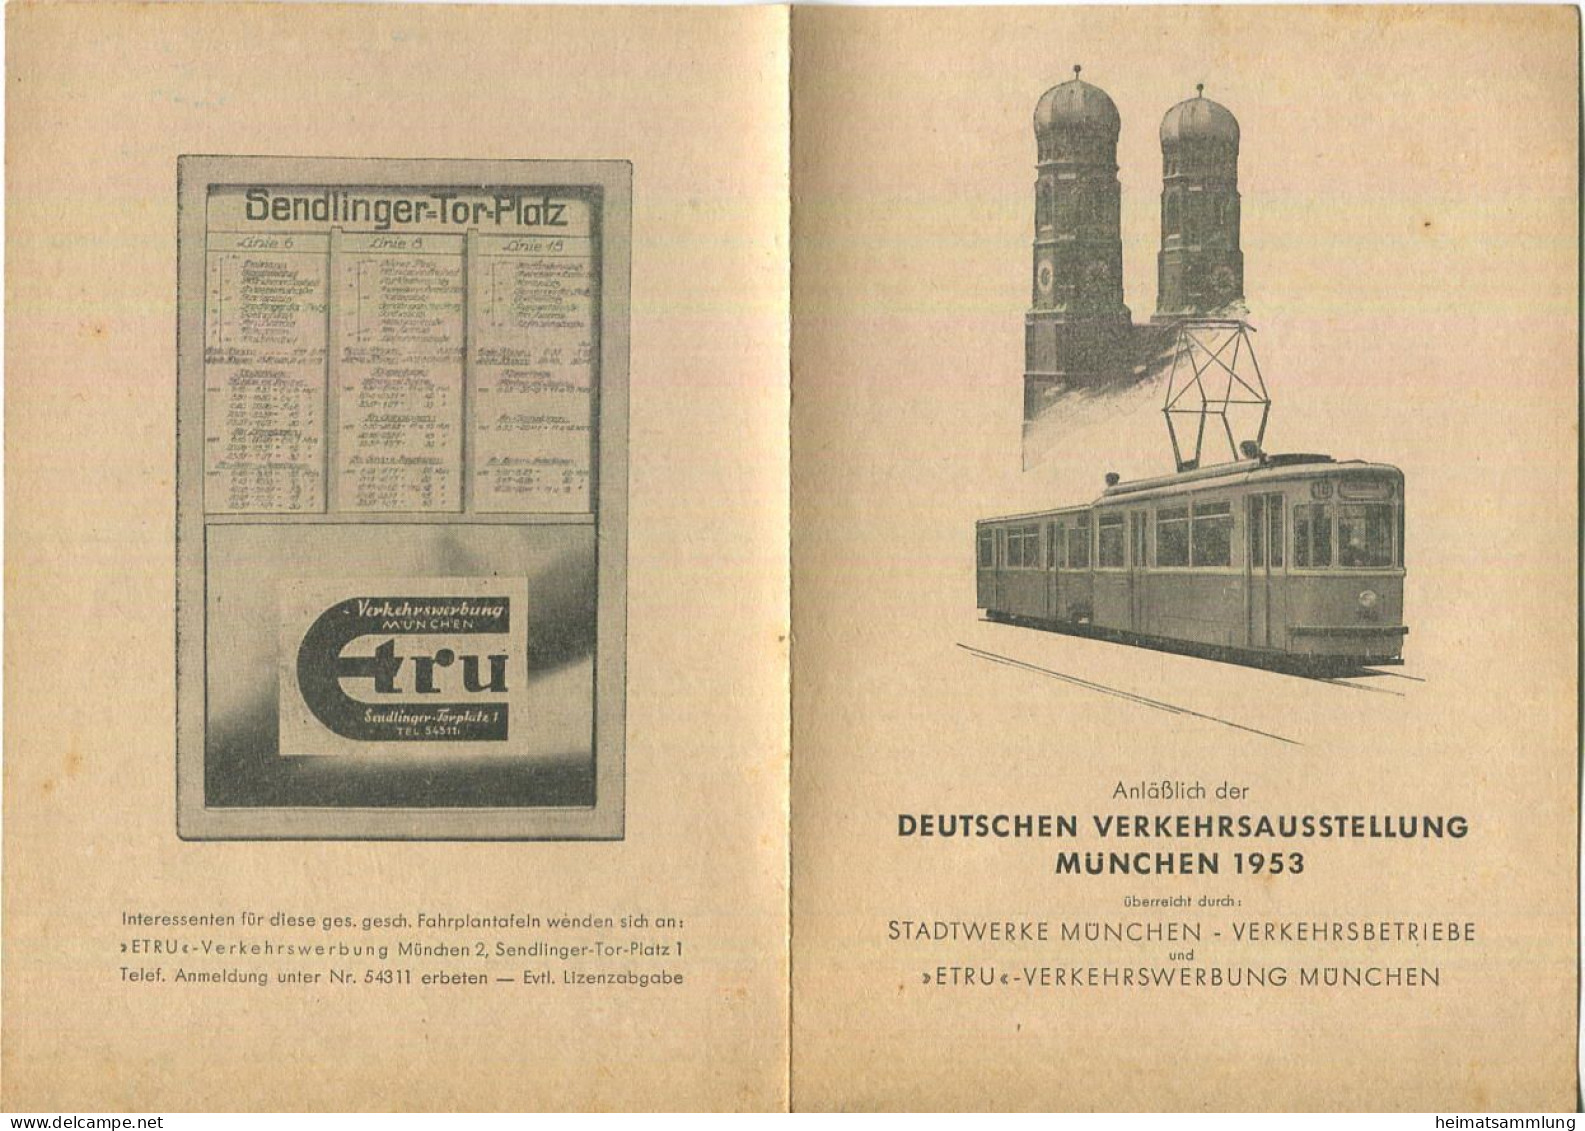 München 1953 - Verkehrslinien - Stadtwerke München - Verkehrsbetriebe - Europa